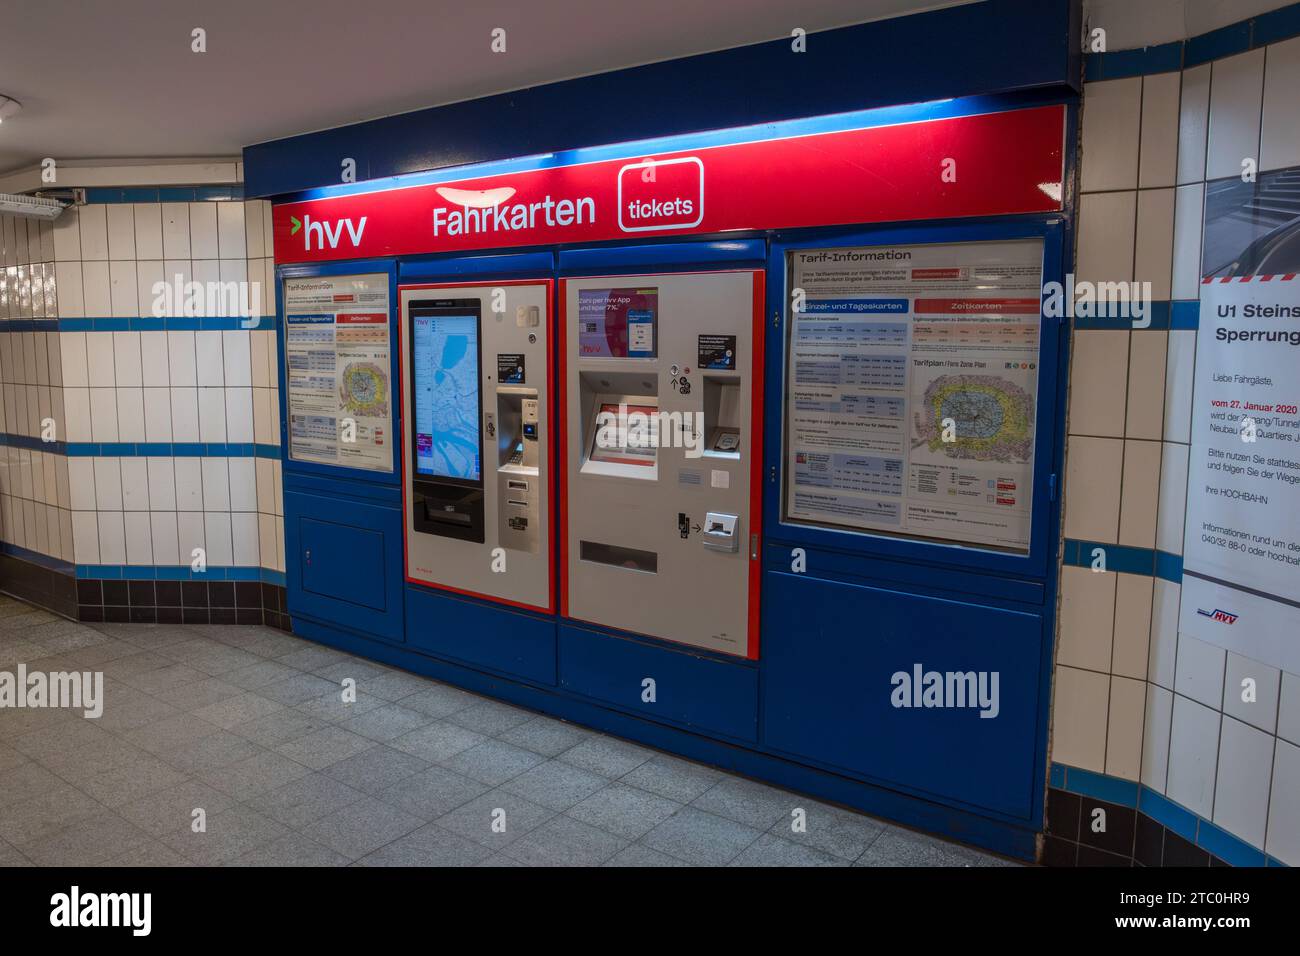 A typical HVV Fahrkarten (ticket machine) at the entrance to Steinstraße station U-bahn station in Hamburg, Germany. Stock Photo